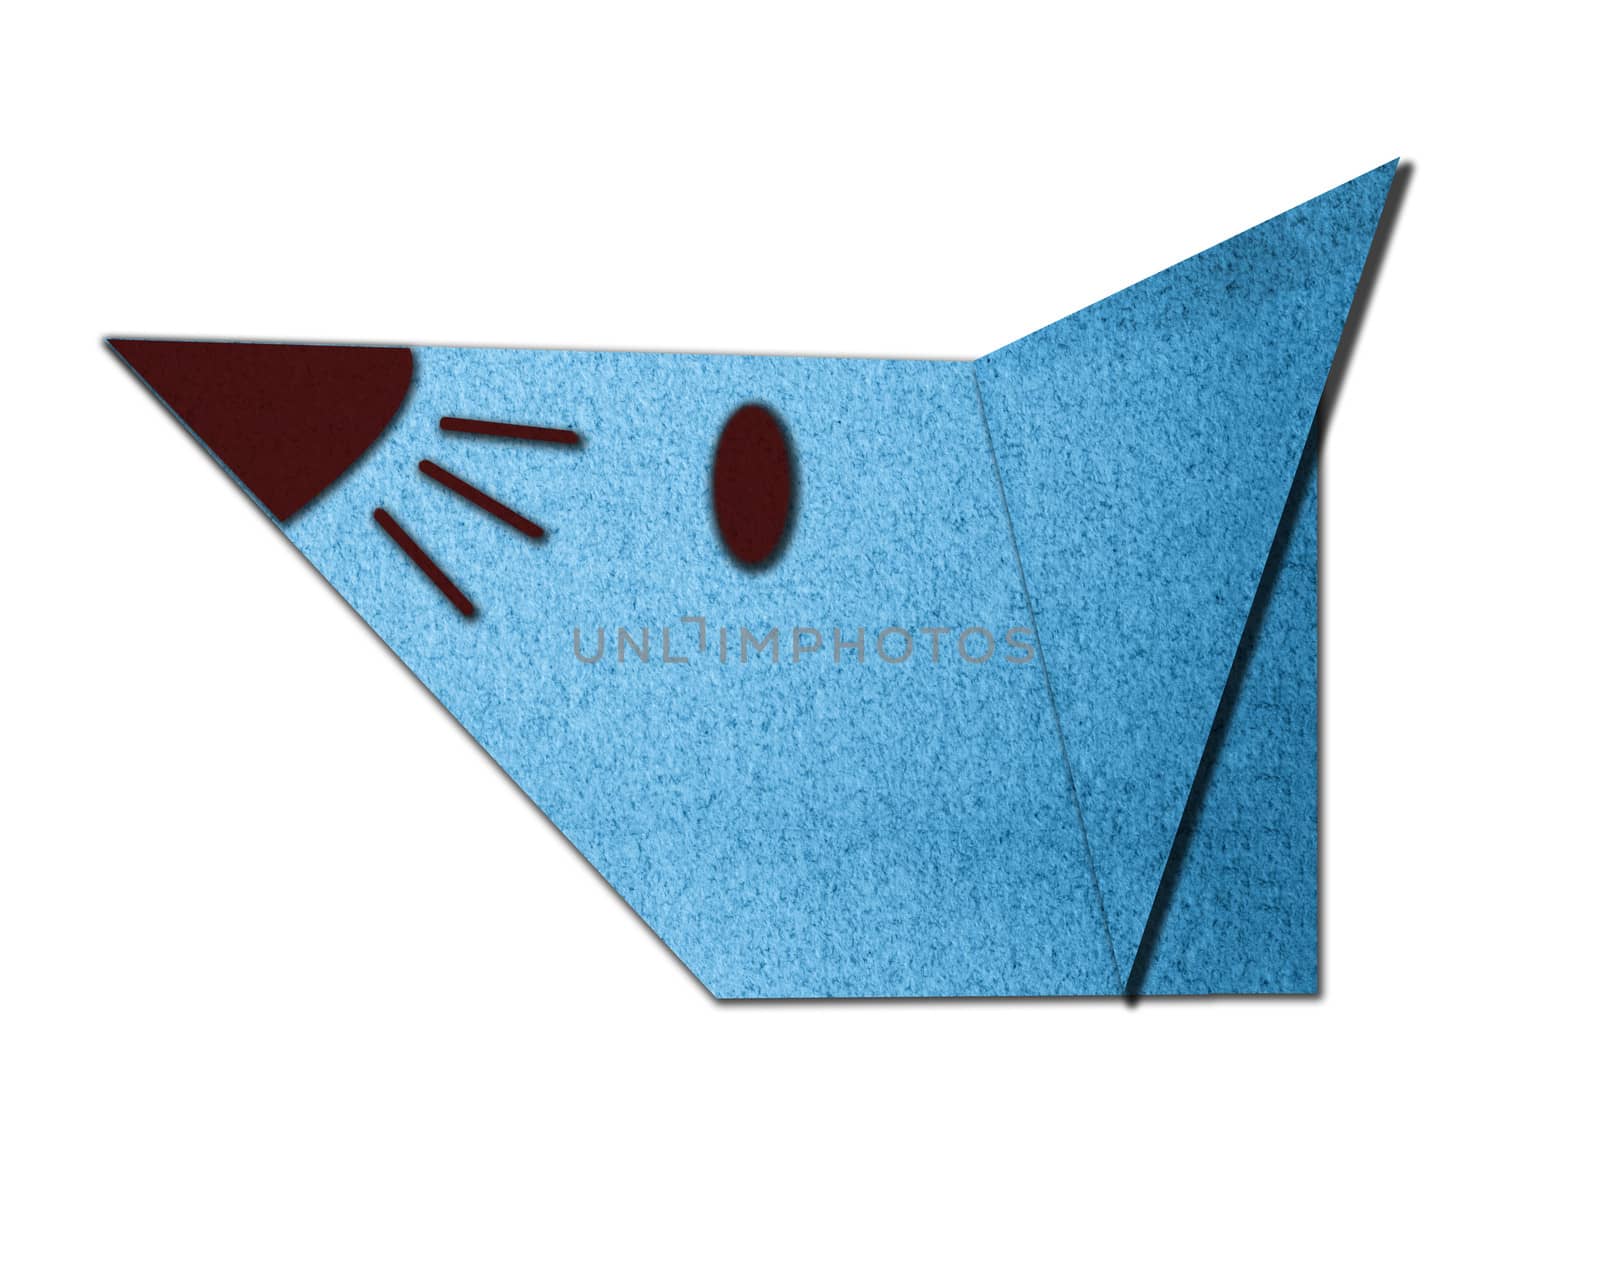 origami rat made of paper by Sorapop